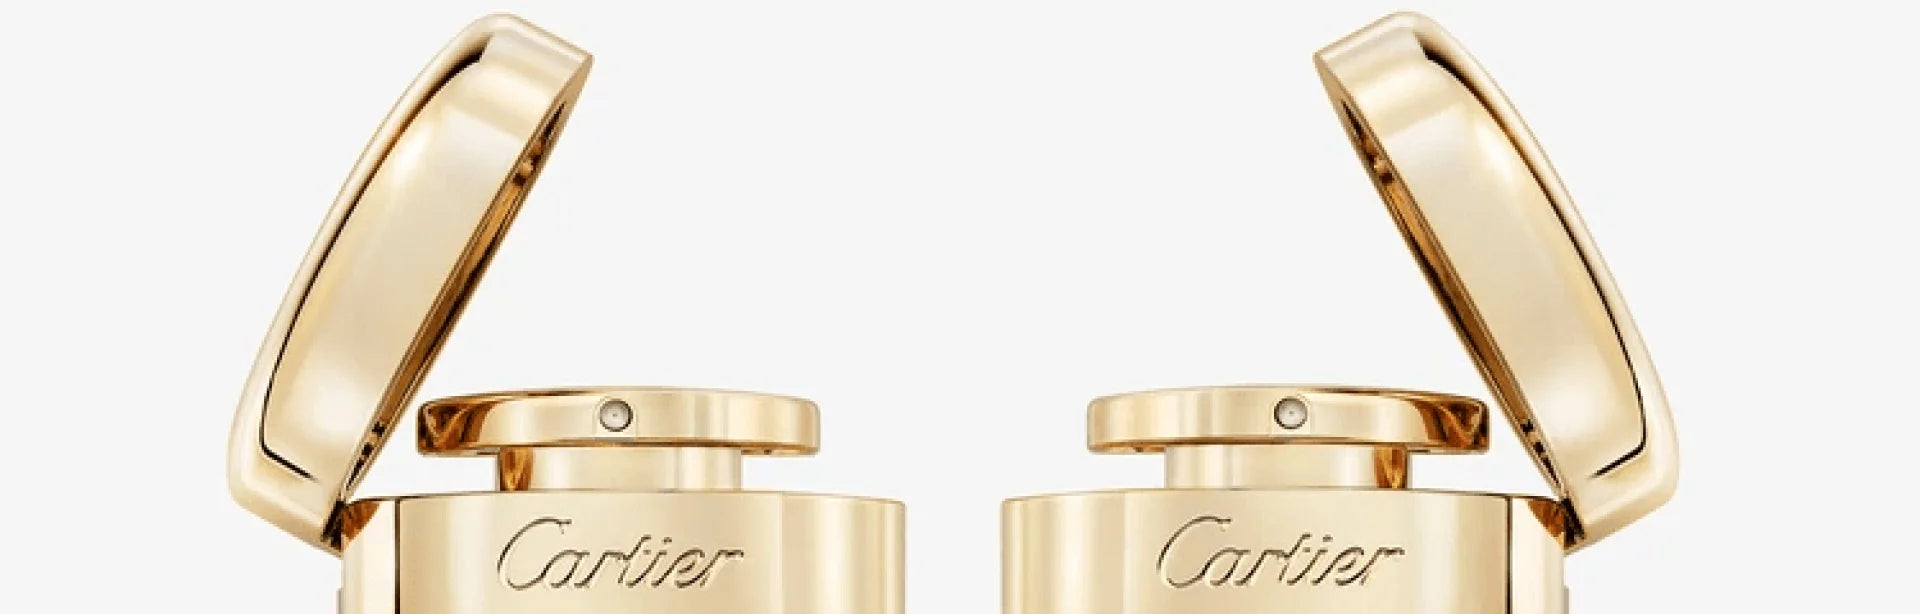 Cartier fragrances at BIJOUX in Jamaica